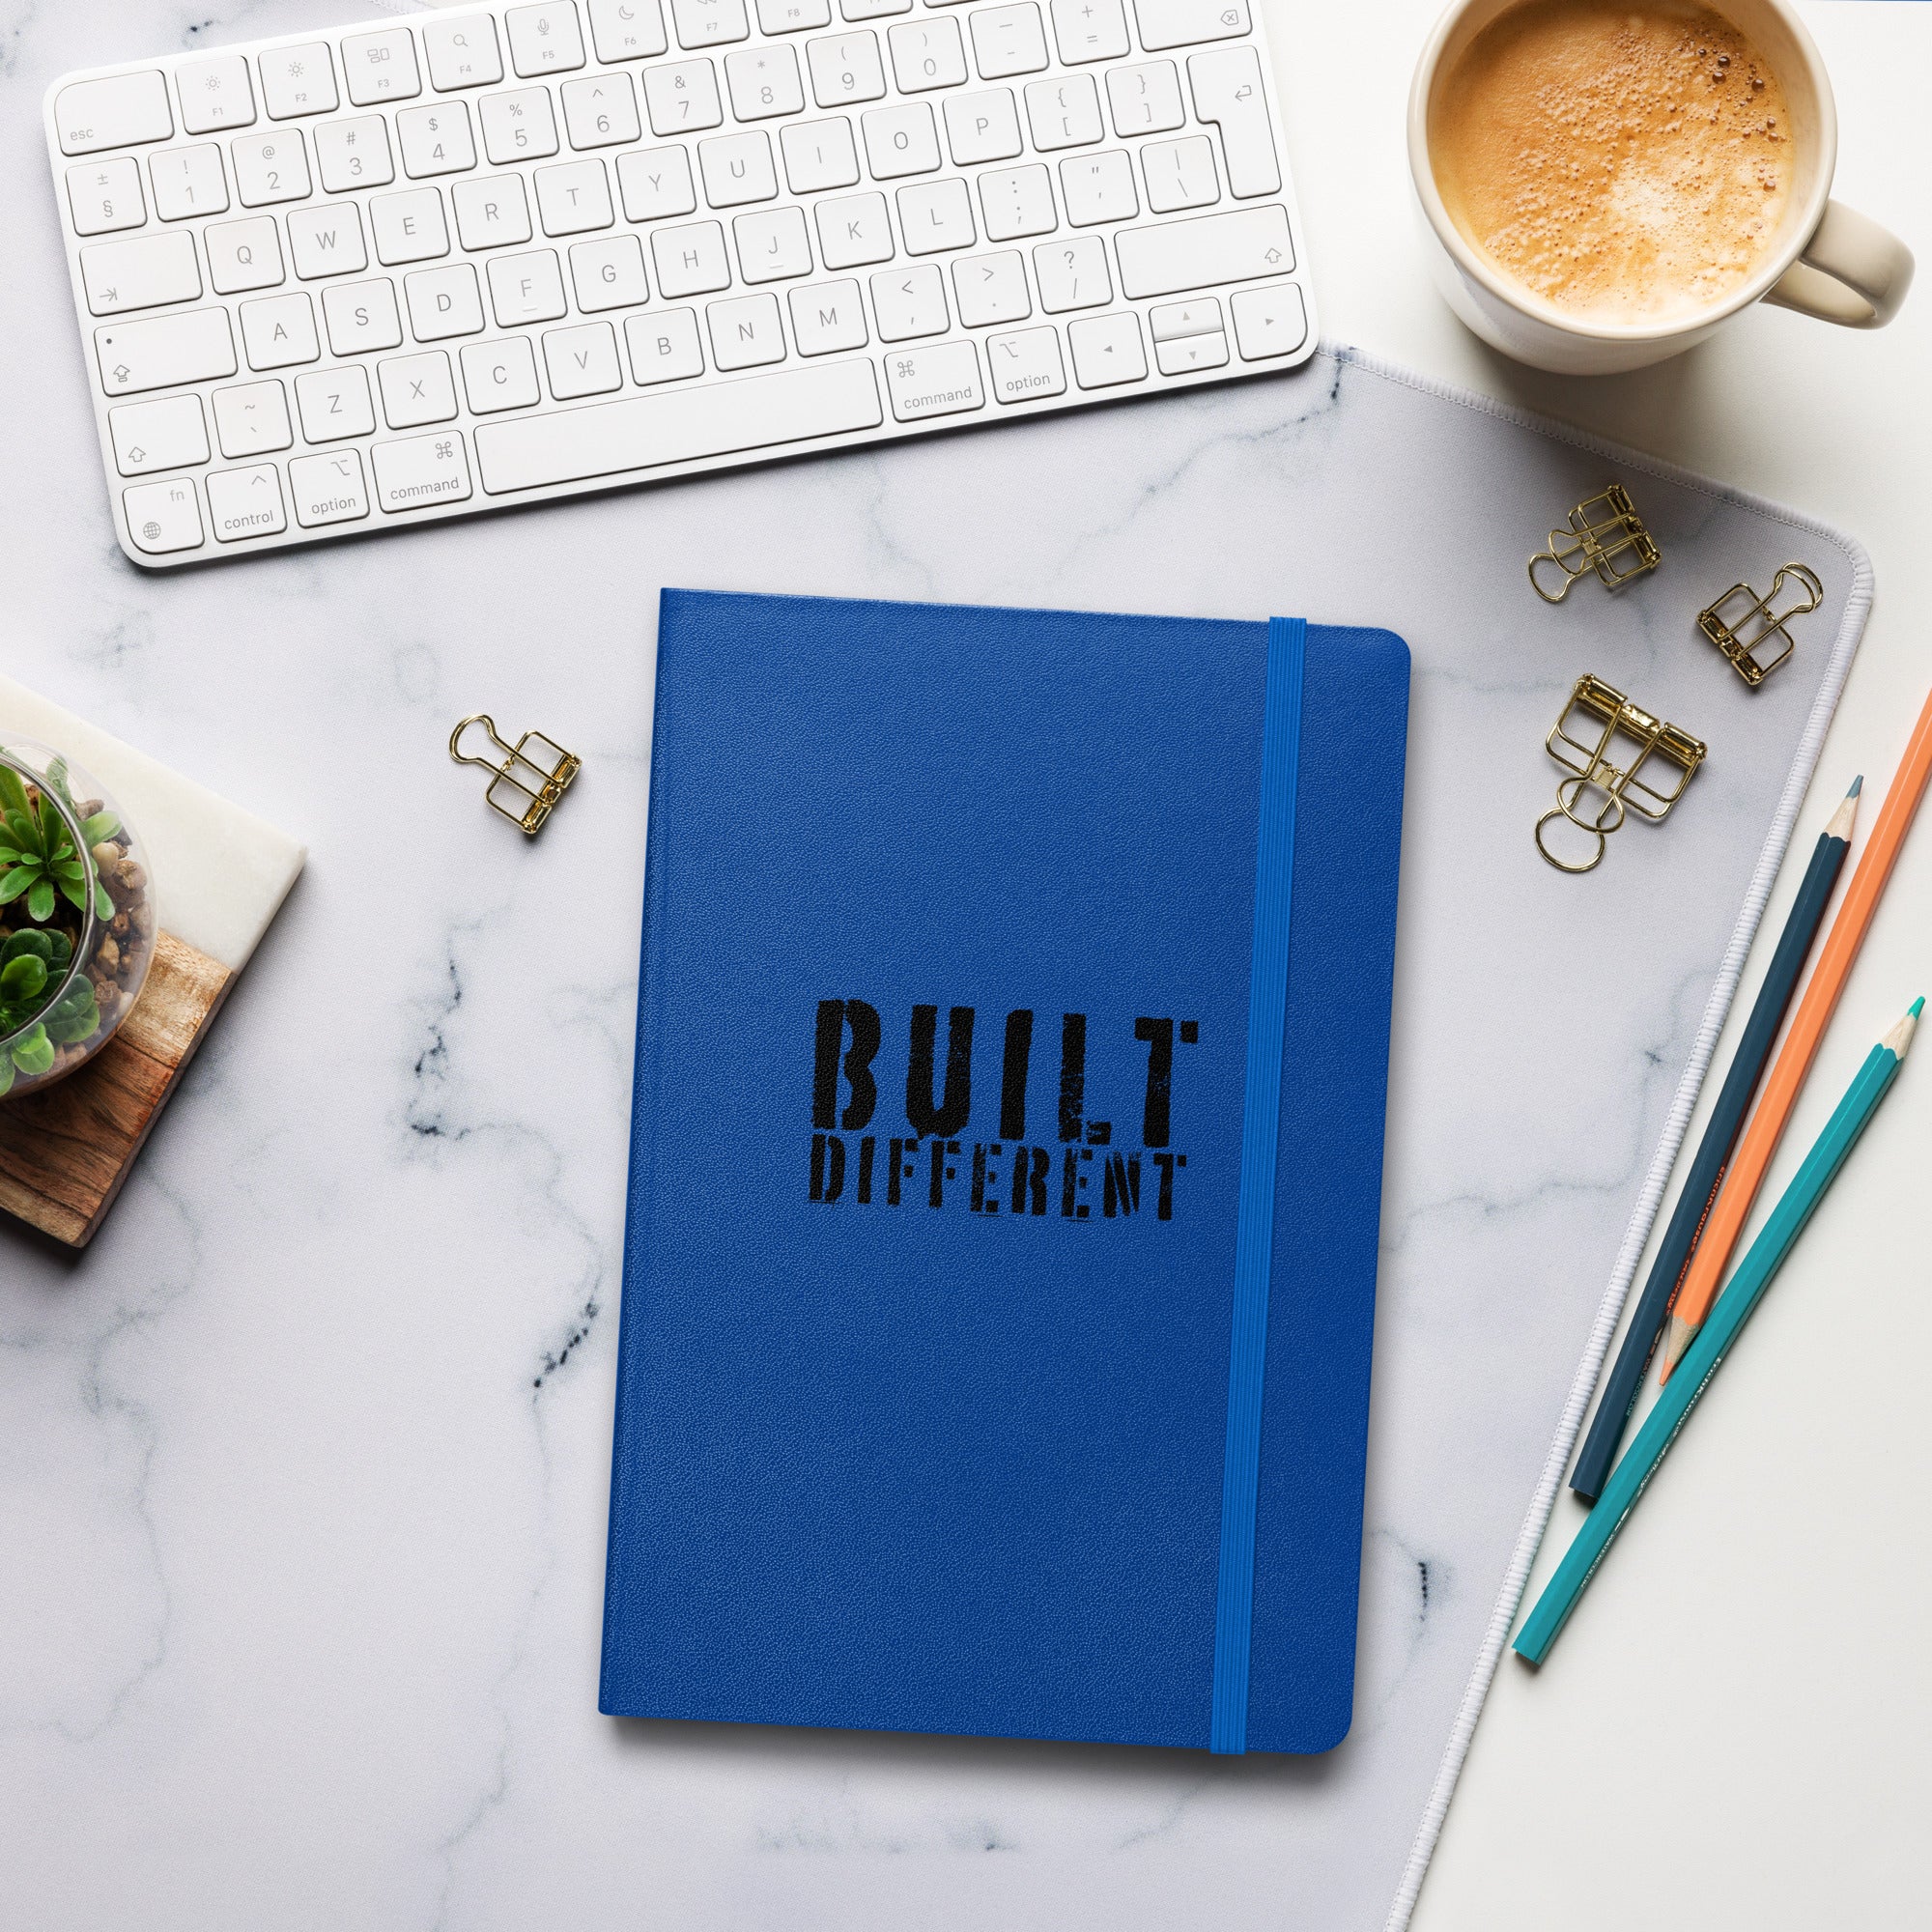 Built Different Journal - Hardcover bound notebook